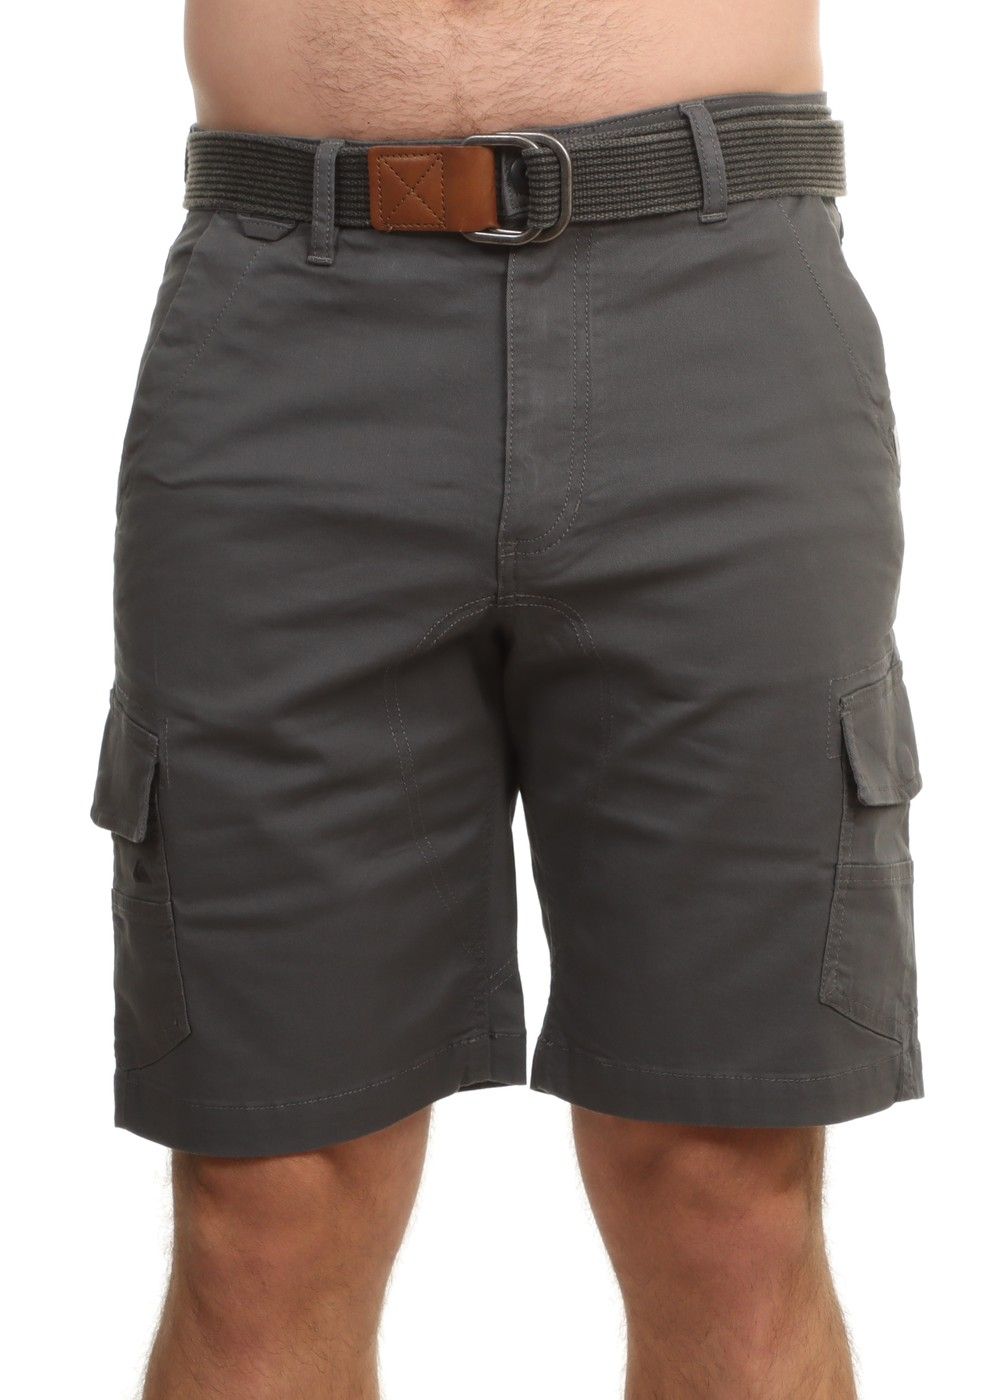 Grey BoohooMAN Denim Fixed Waist Band Cargo Shorts in Charcoal Mens Clothing Shorts Cargo shorts for Men 